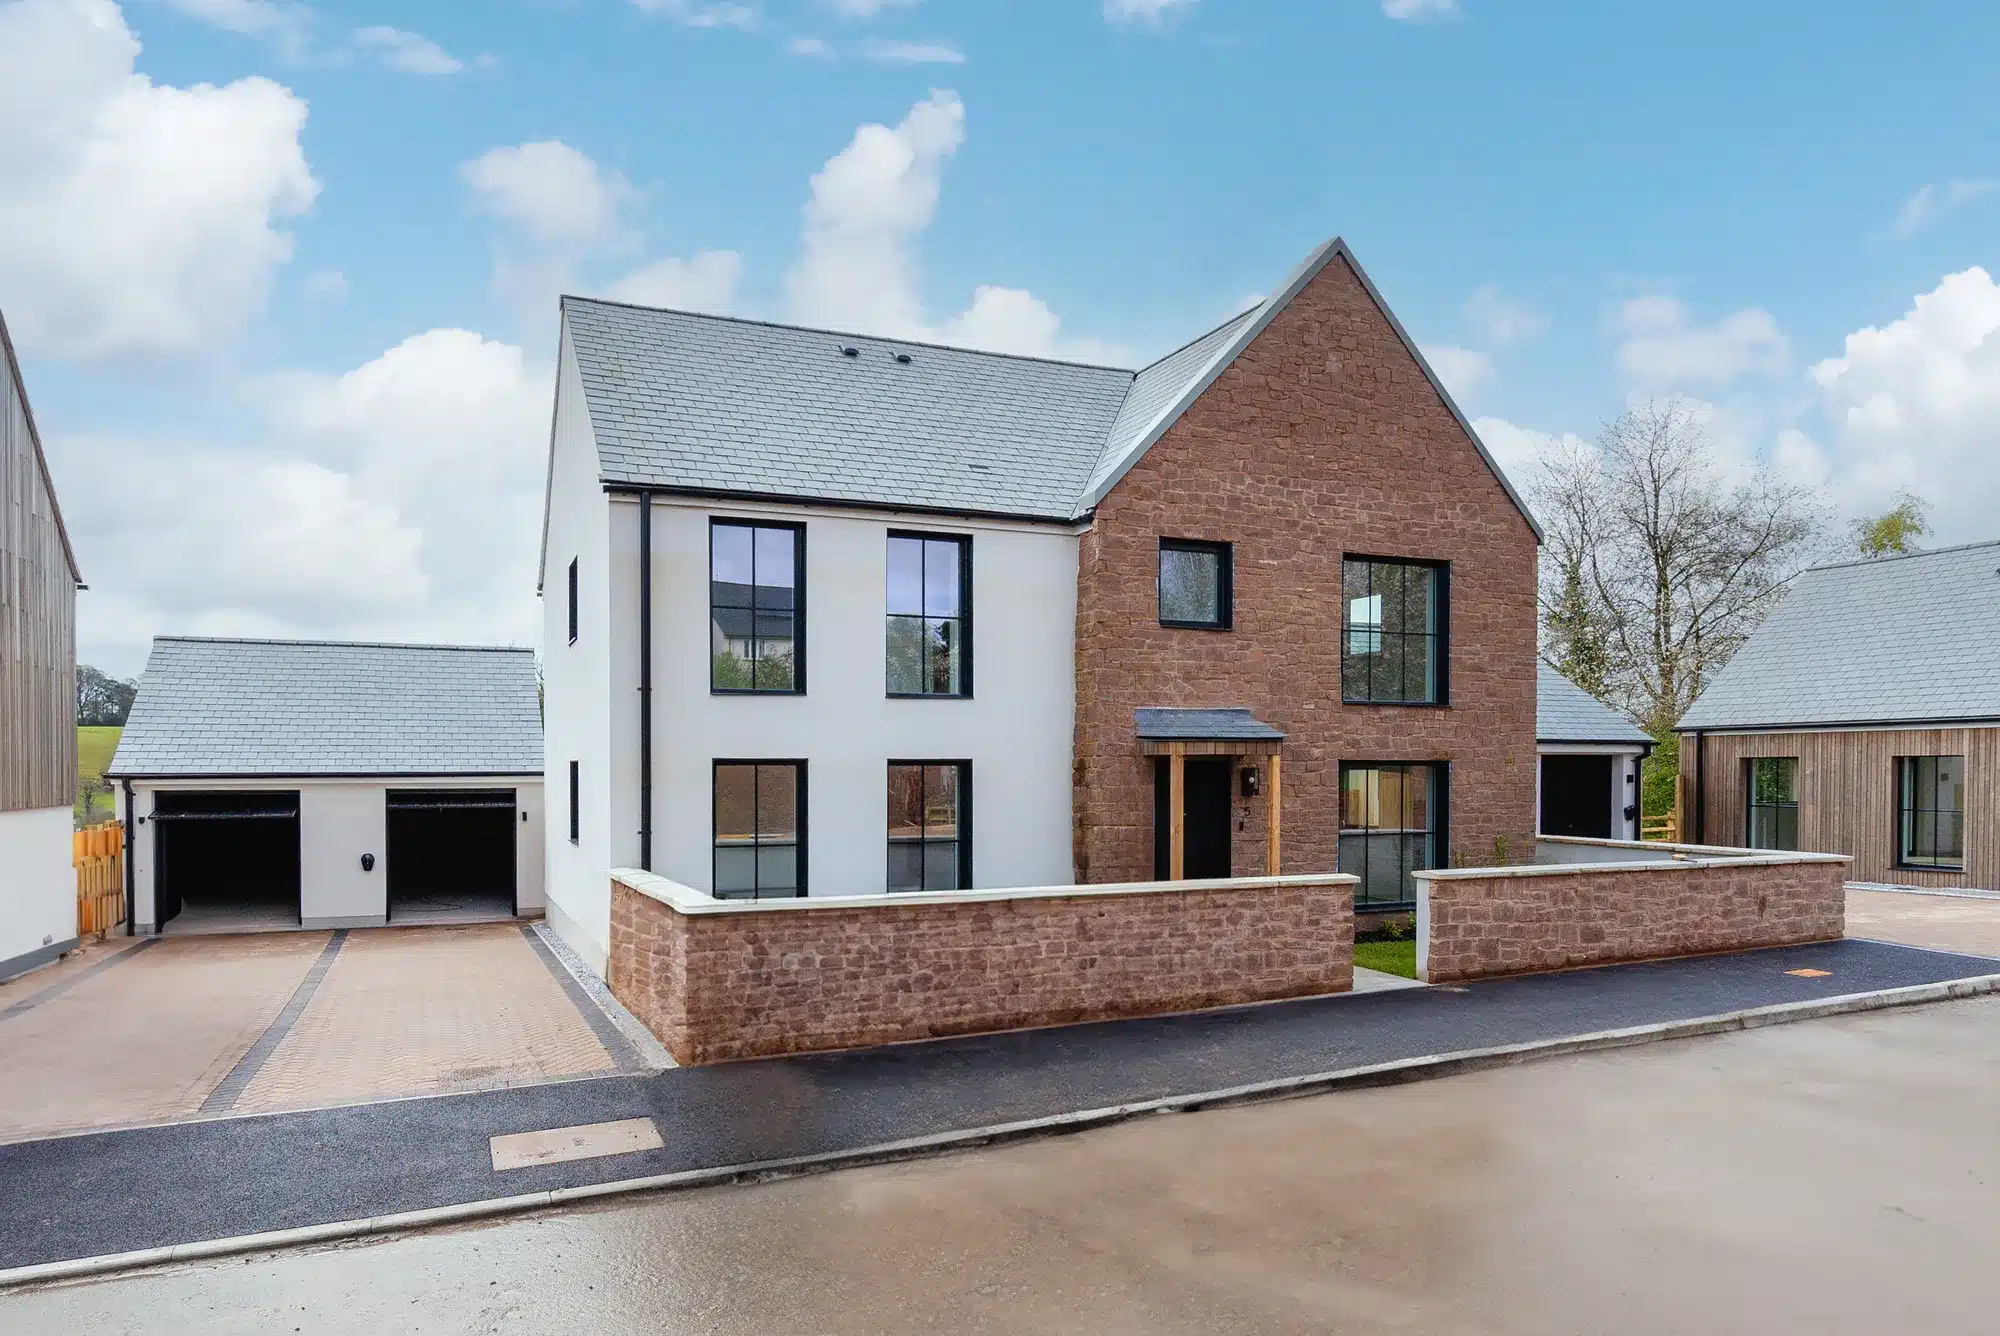 New build homes for sale in Devon - Weavers Way